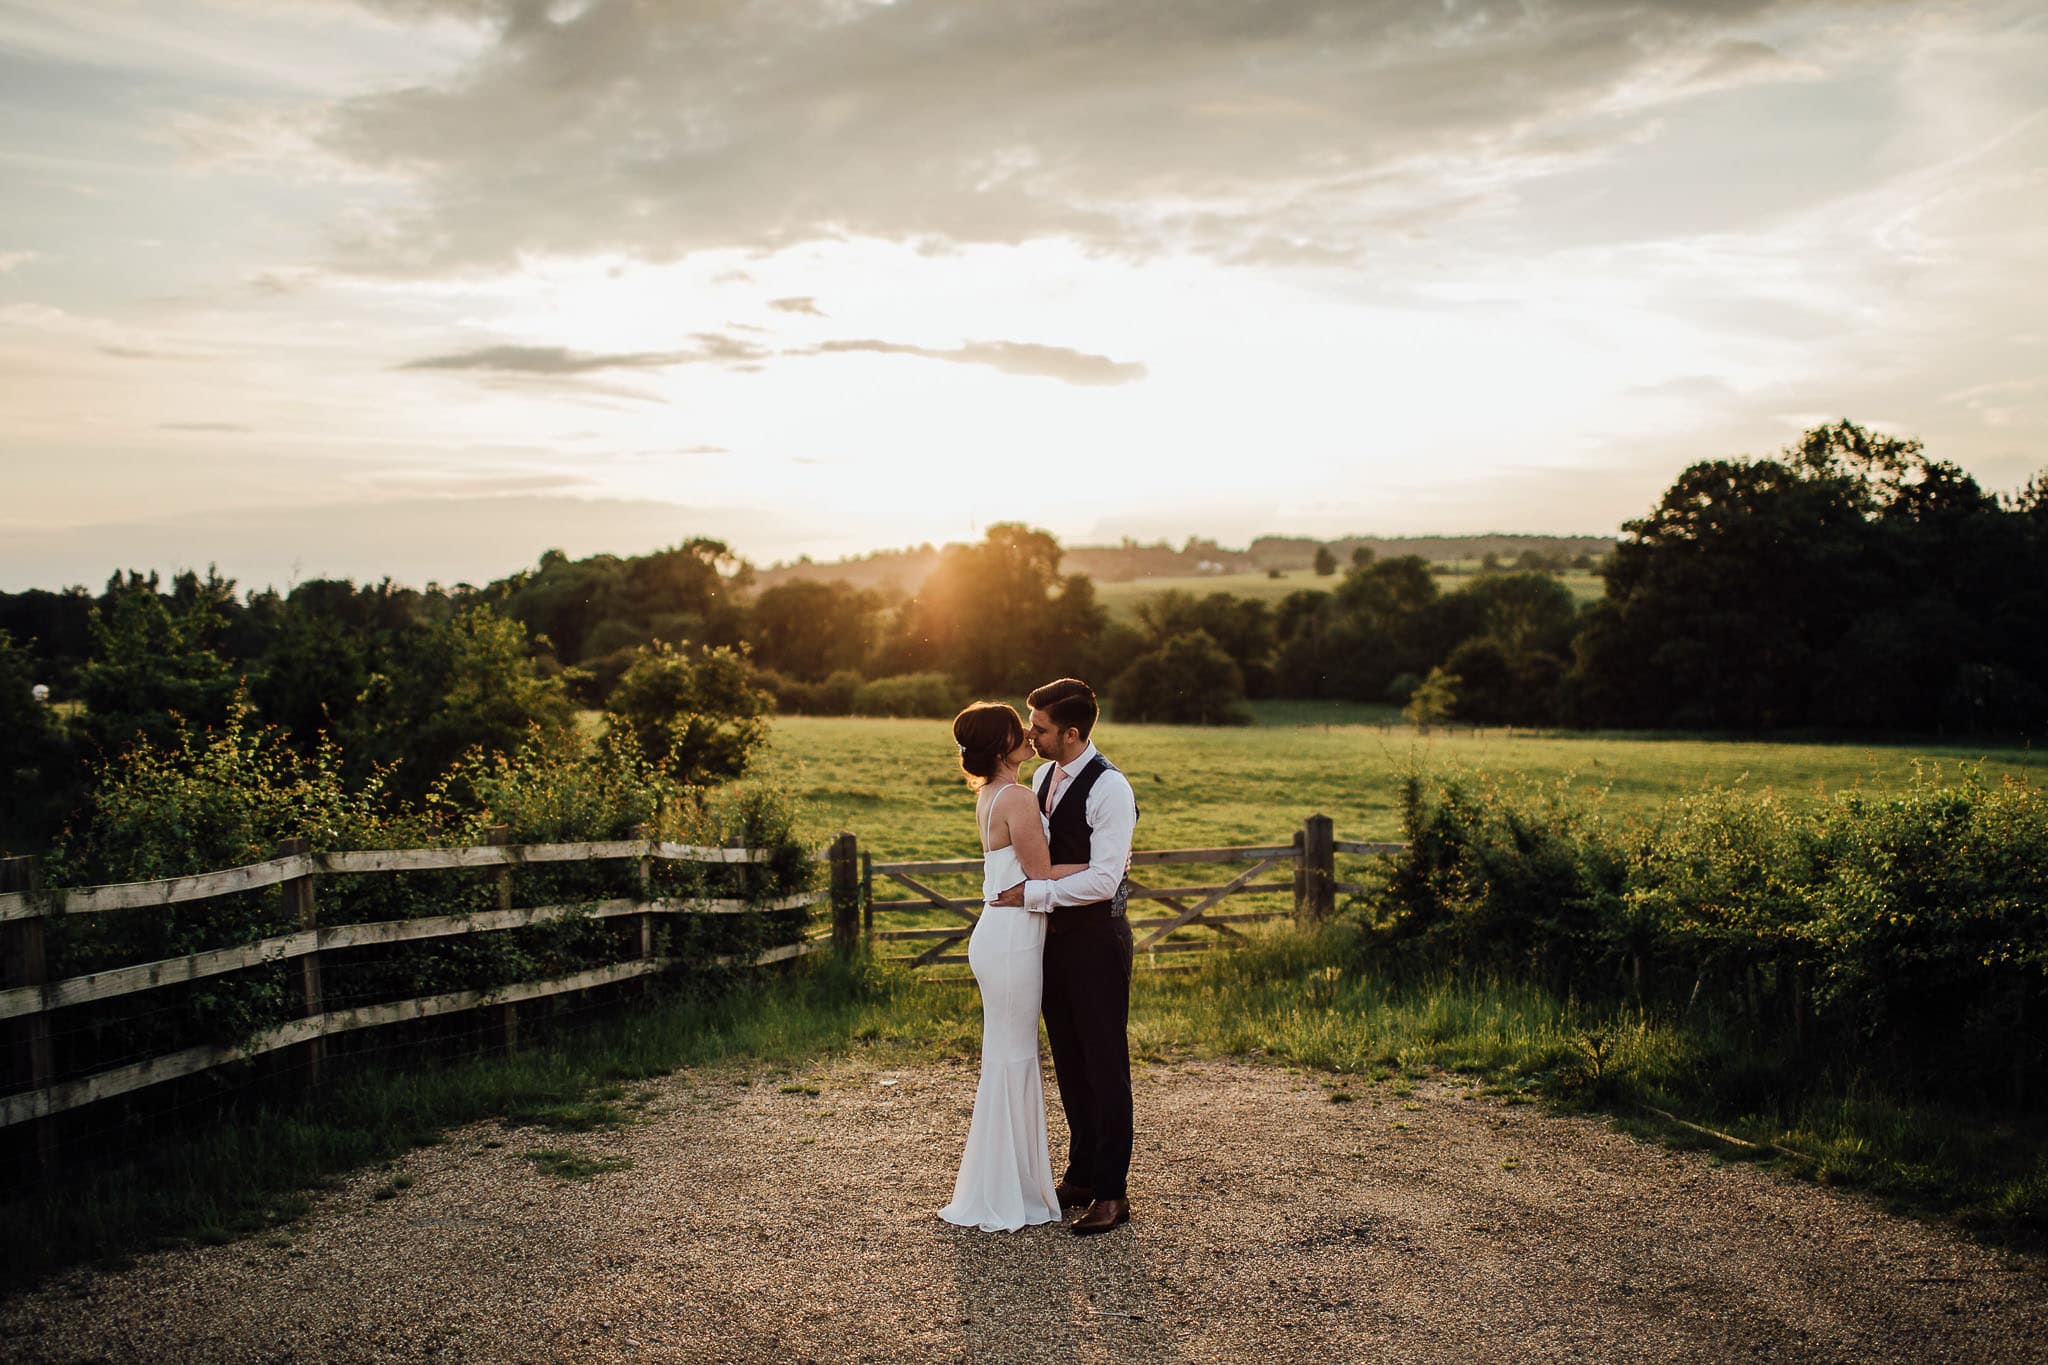 dodford manor wedding photographer sunset portrait